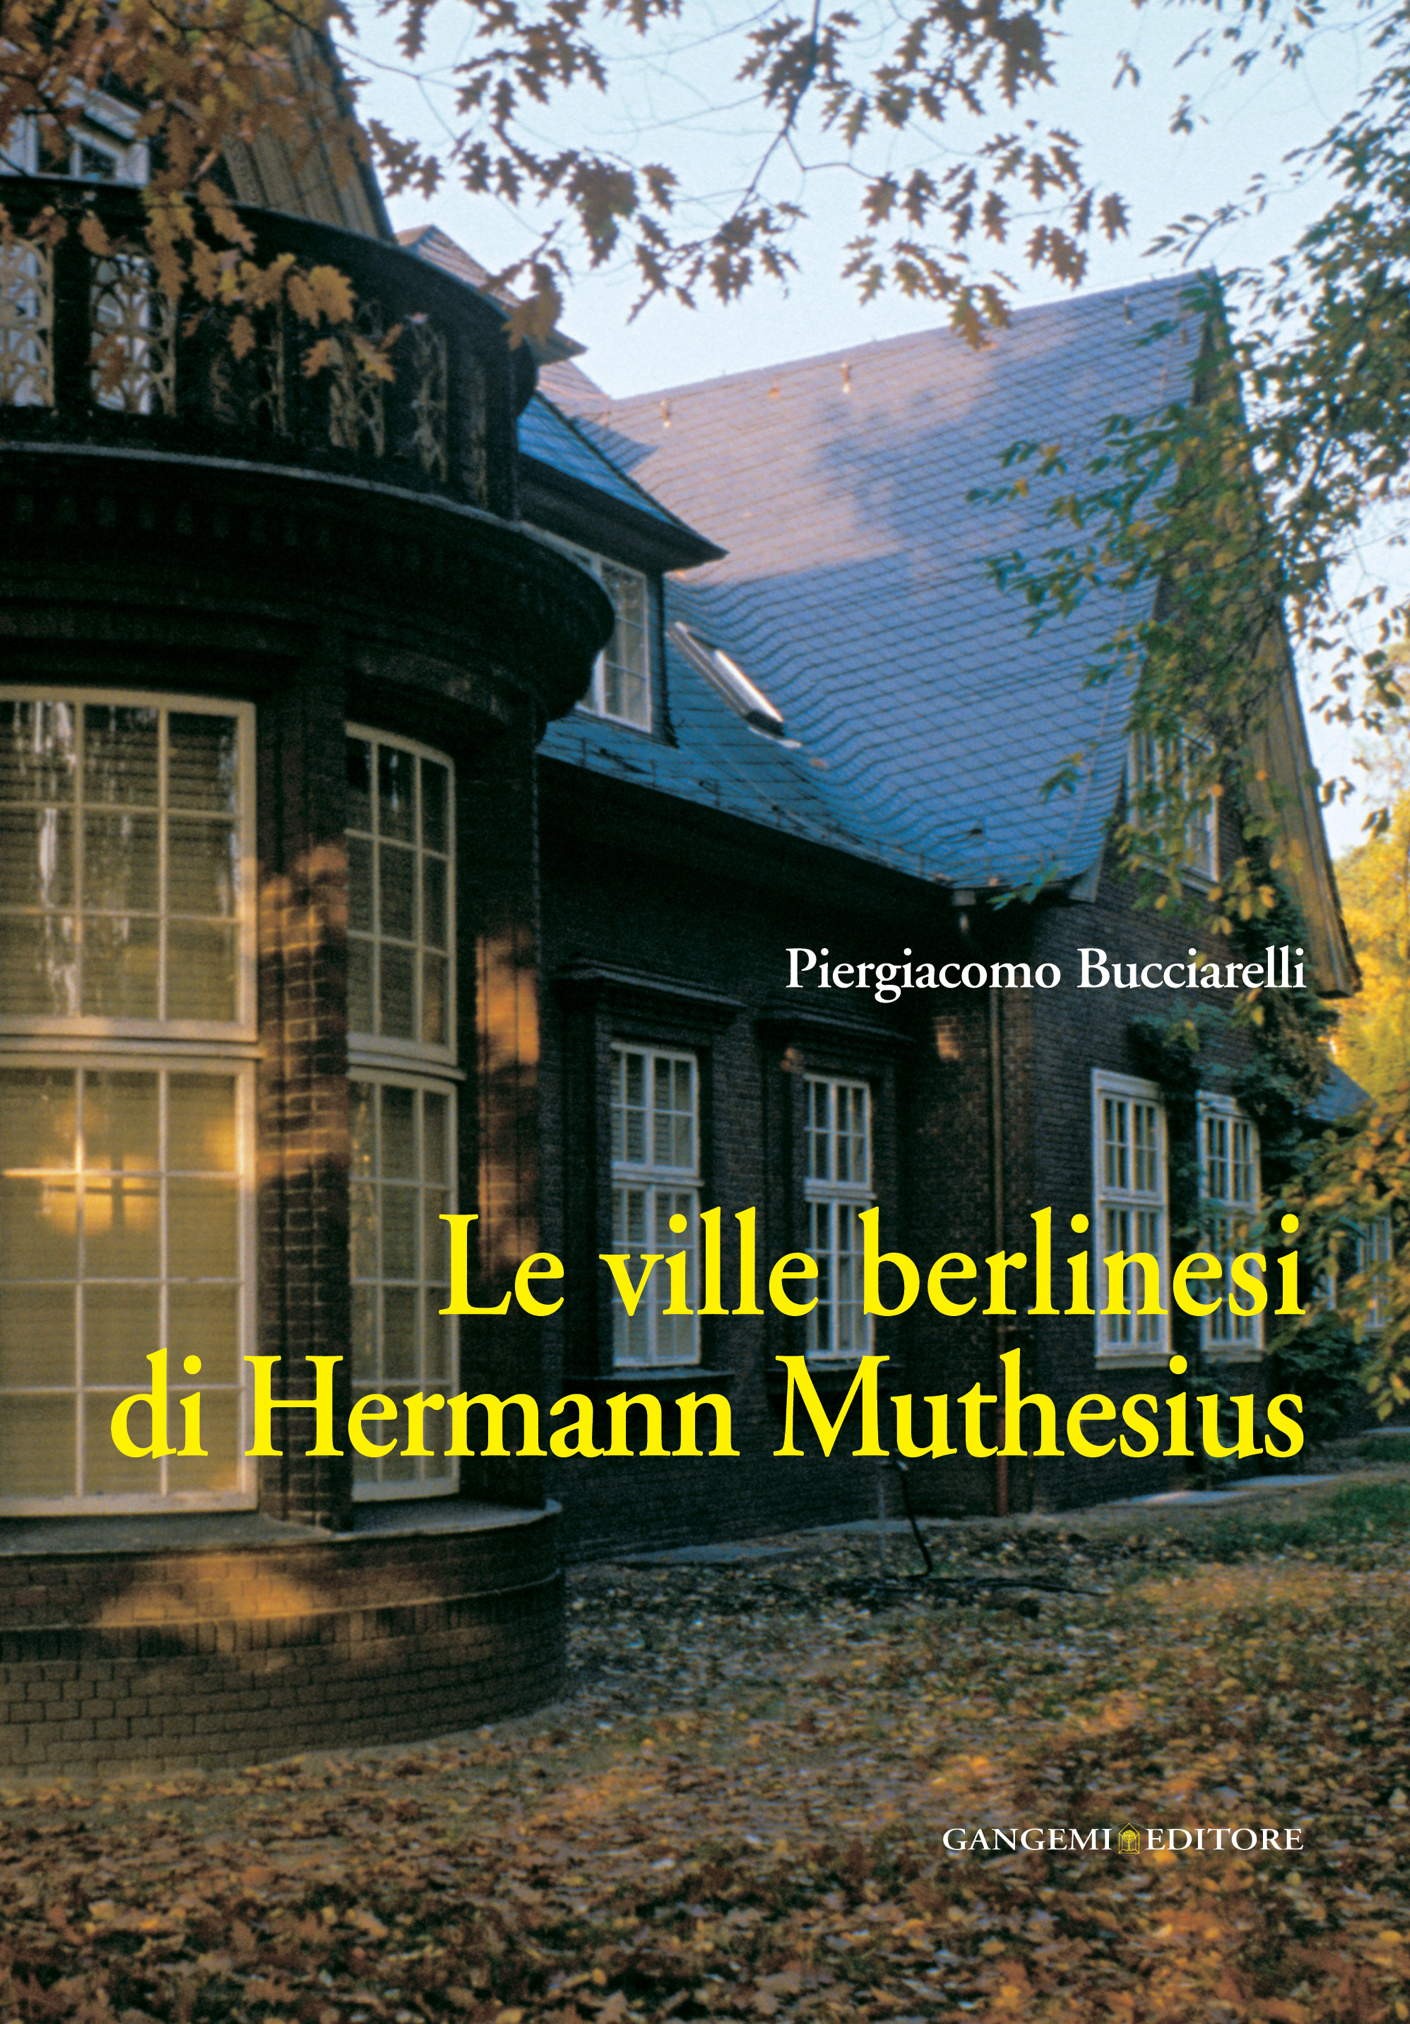 Le ville berlinesi di Hermann Muthesius - Librerie.coop